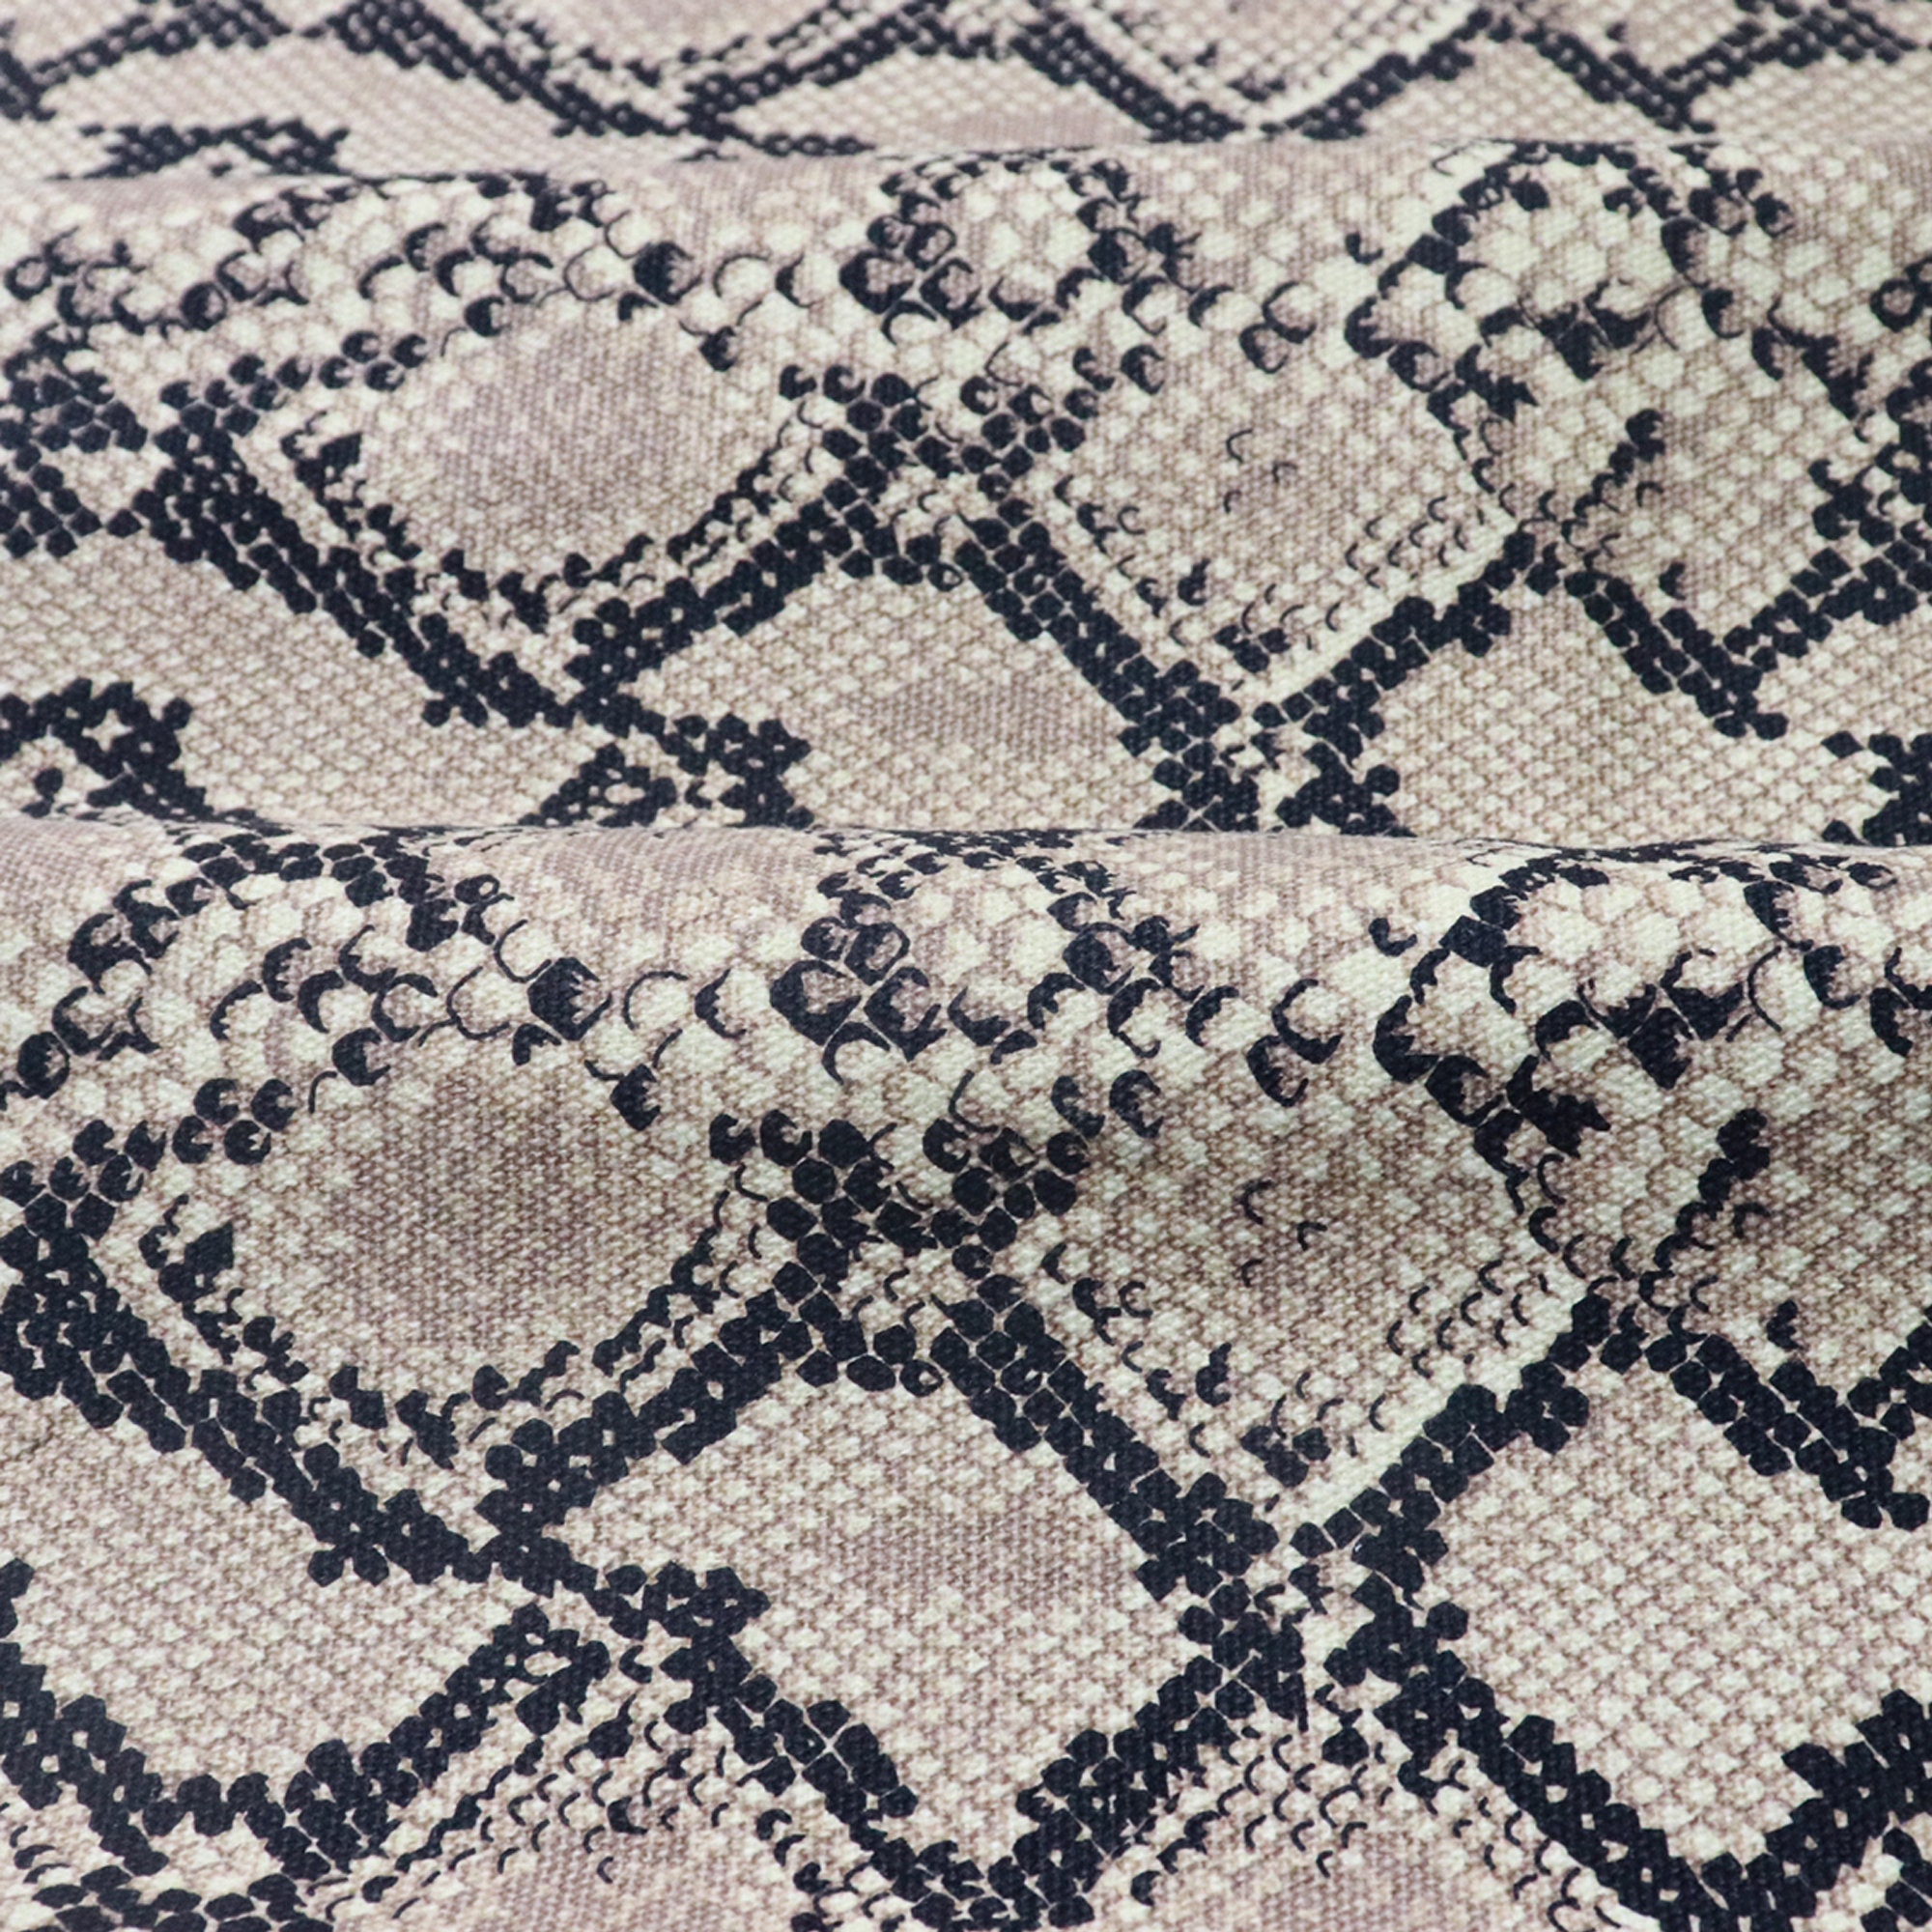 Snake Skin Pattern Martin Fabric Printed Cotton Fabric Snake - Etsy